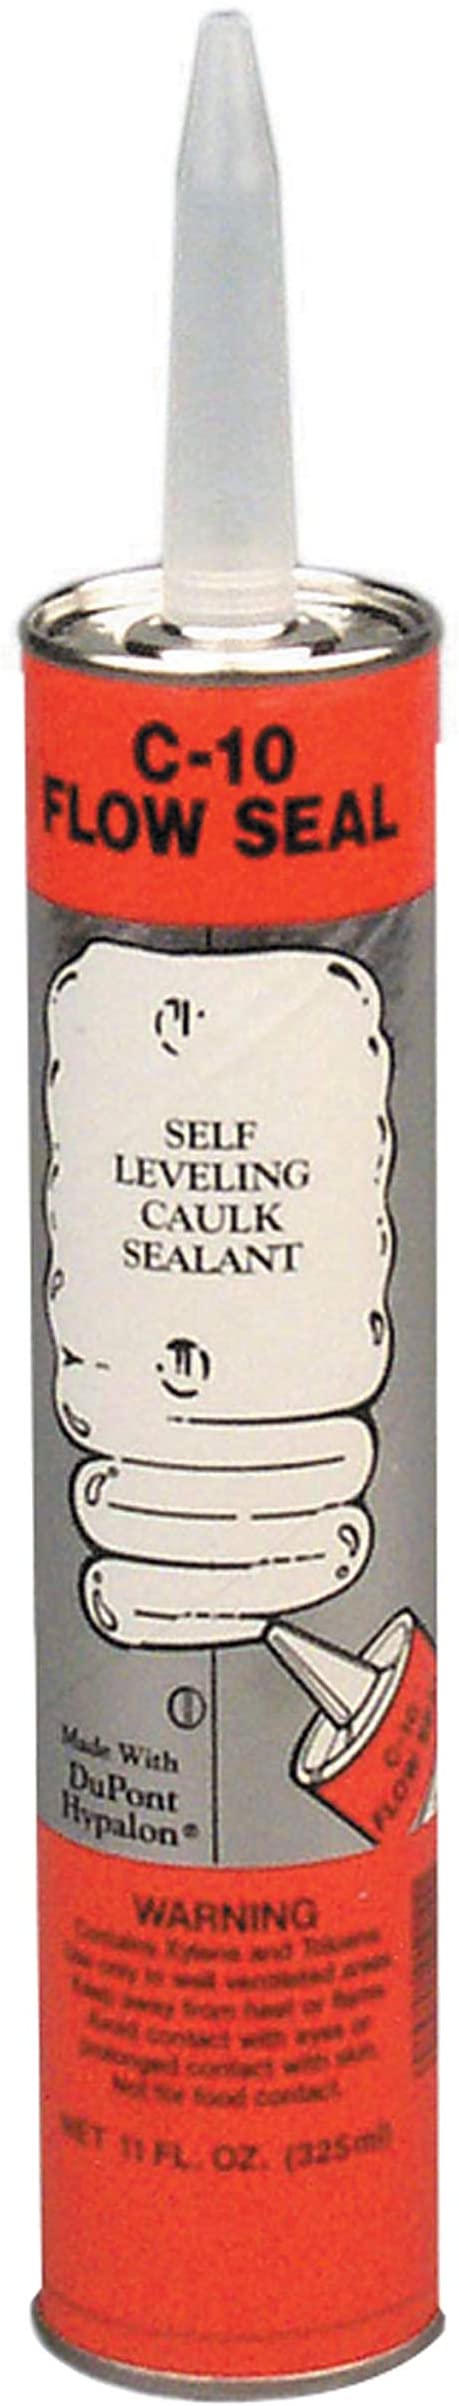 Dyco C10W Flow Seal Self Leveling Caulk Sealant - White